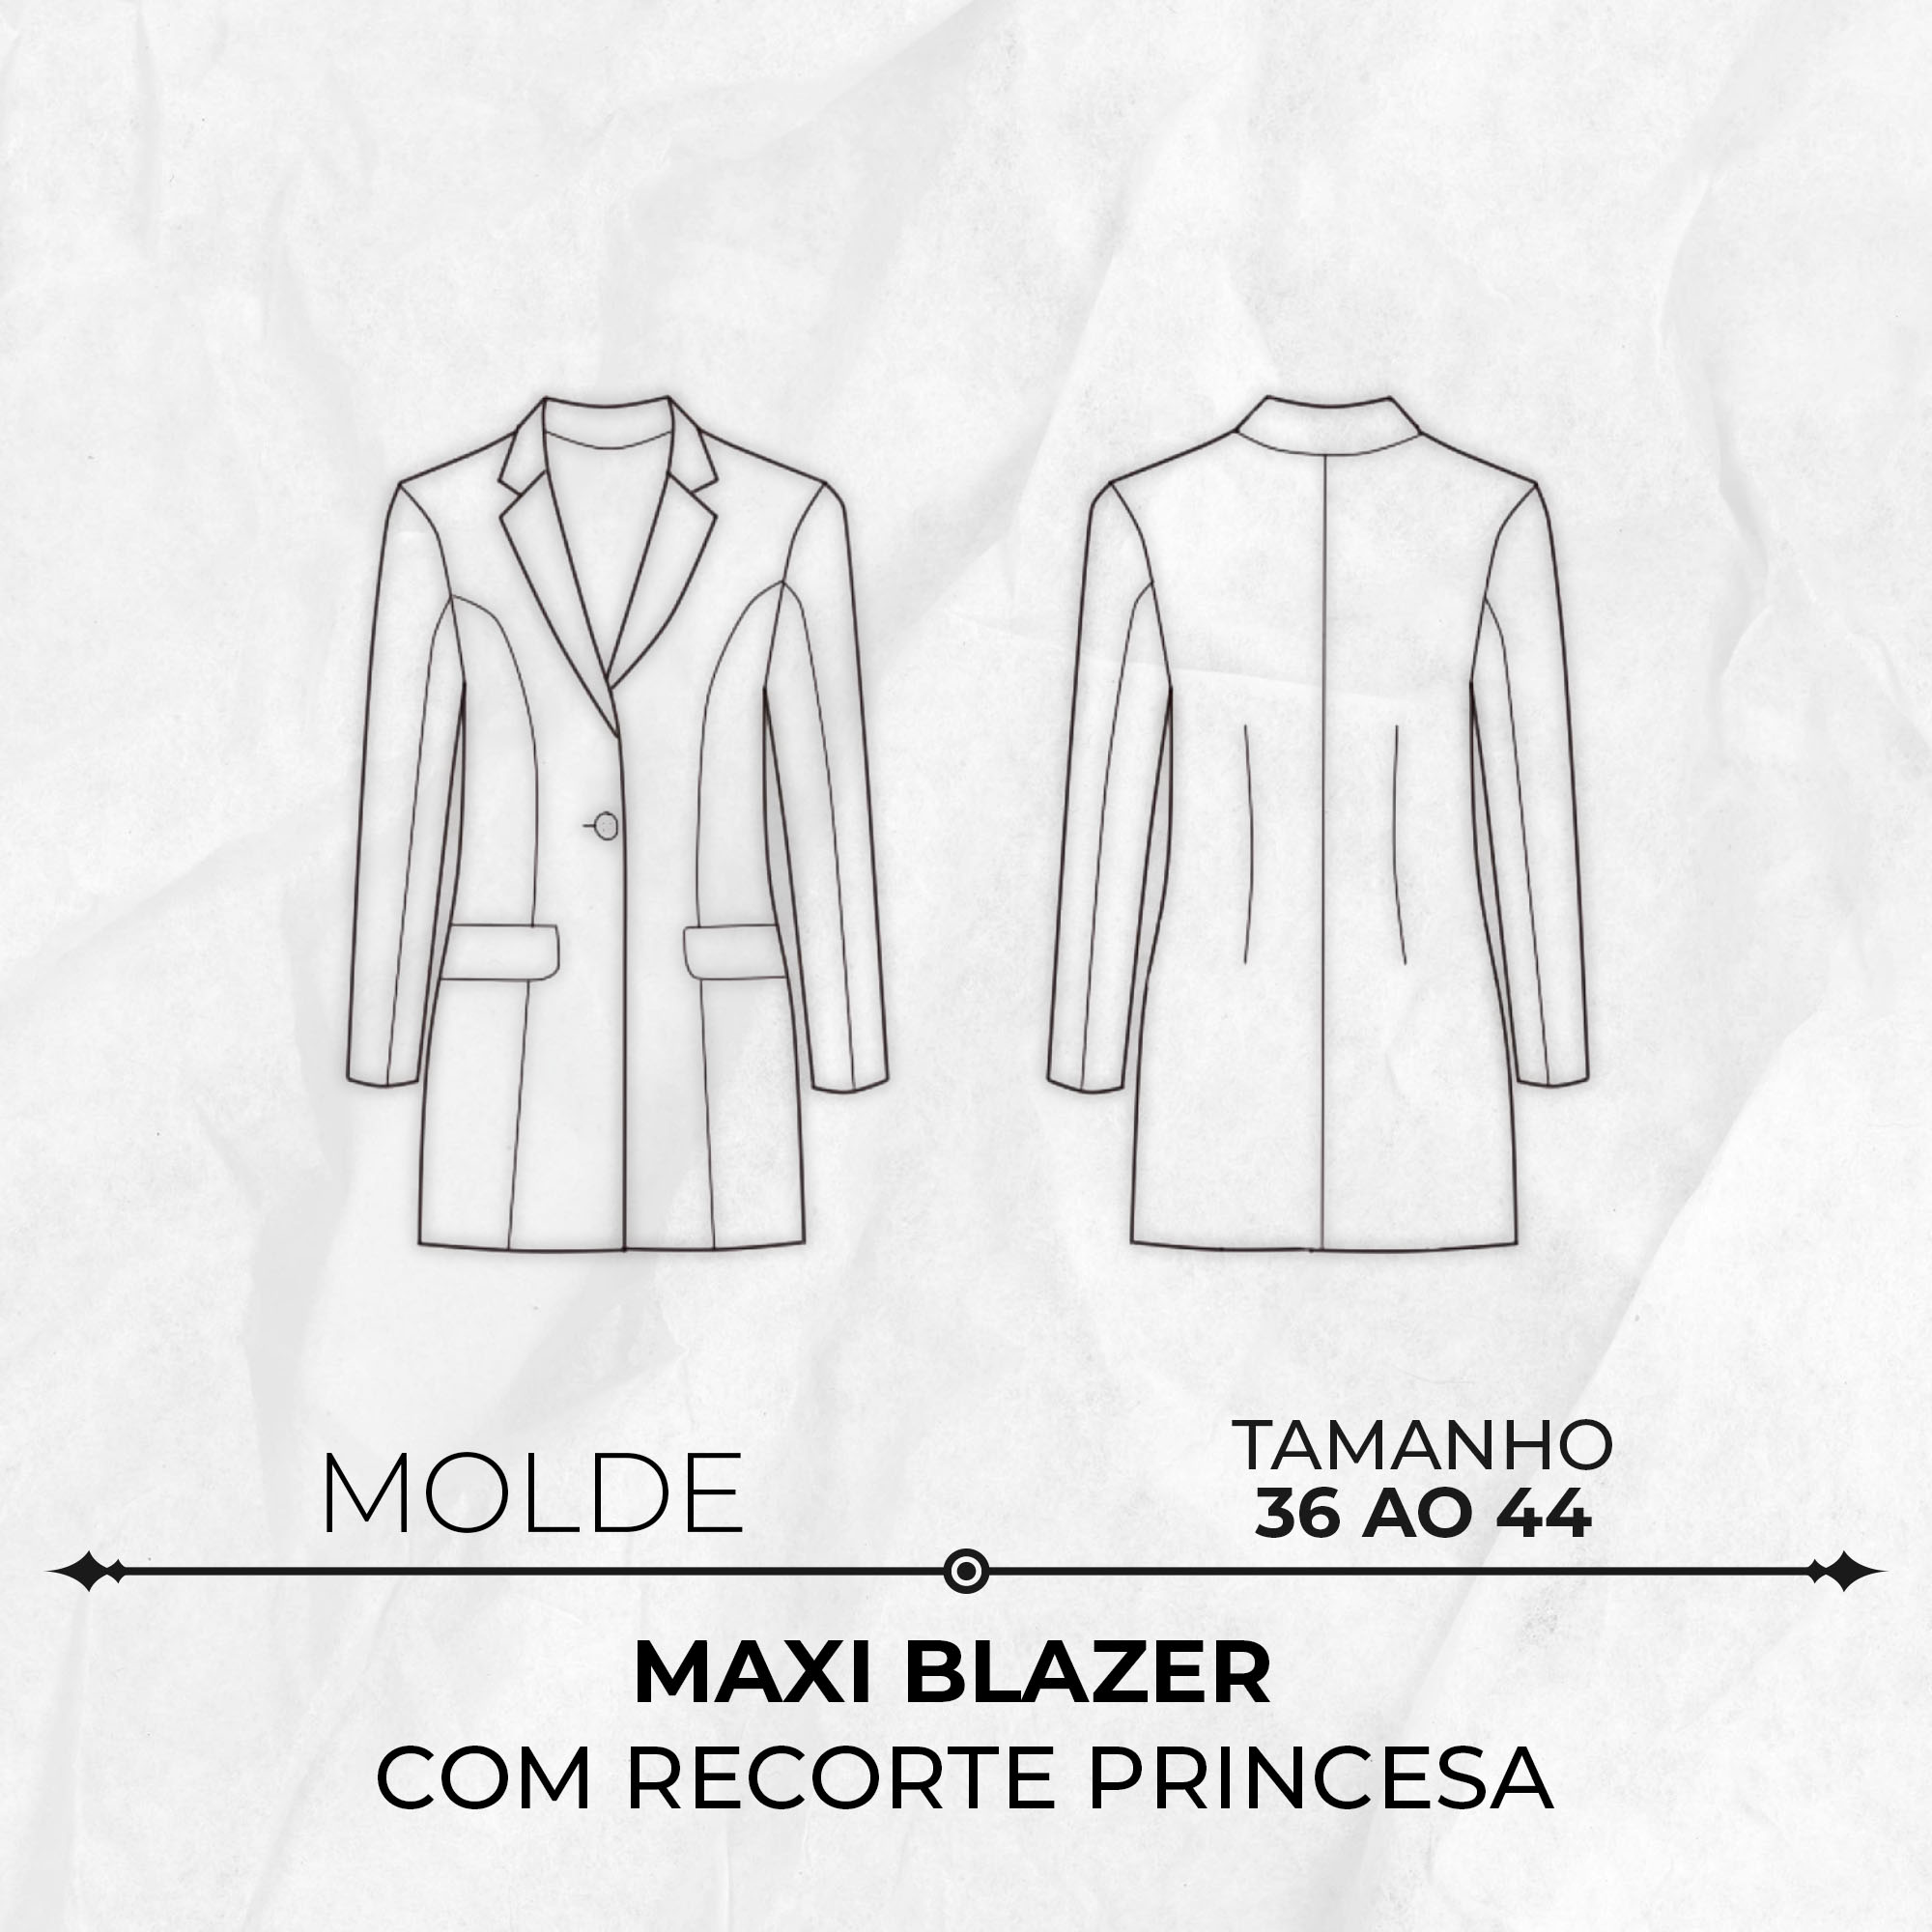 Molde maxi blazer feminino recorte princesa tamanho 36 ao 44 by Wania Machado